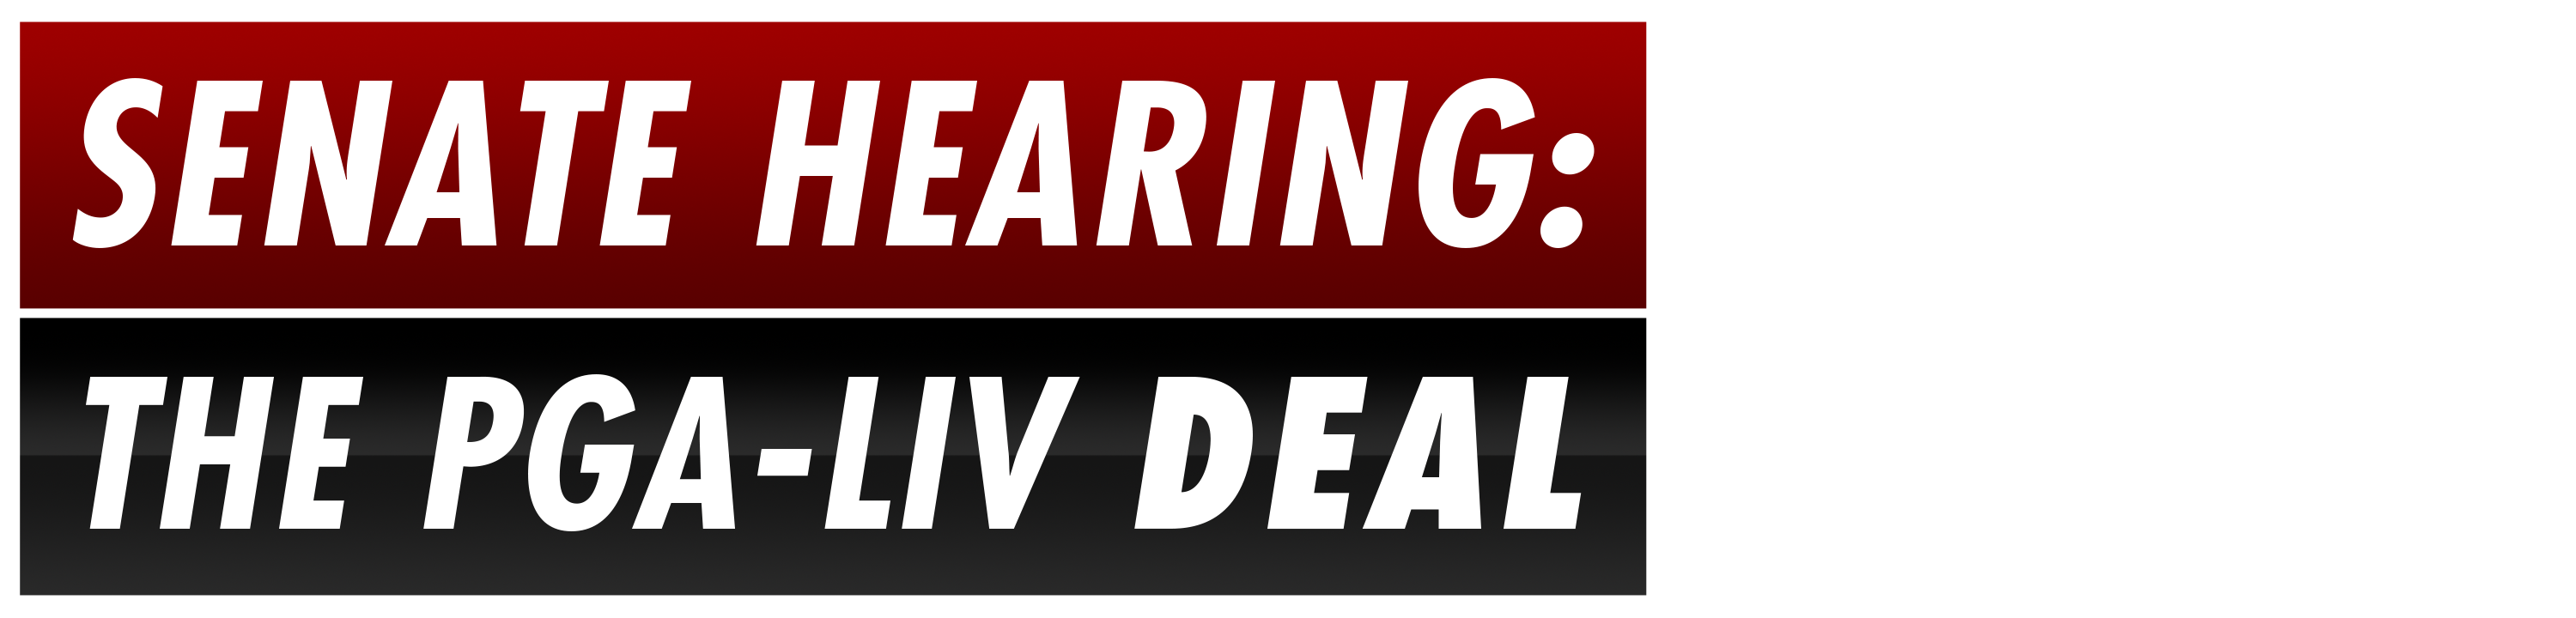 Senate Hearing: The PGA-LIV Deal logo